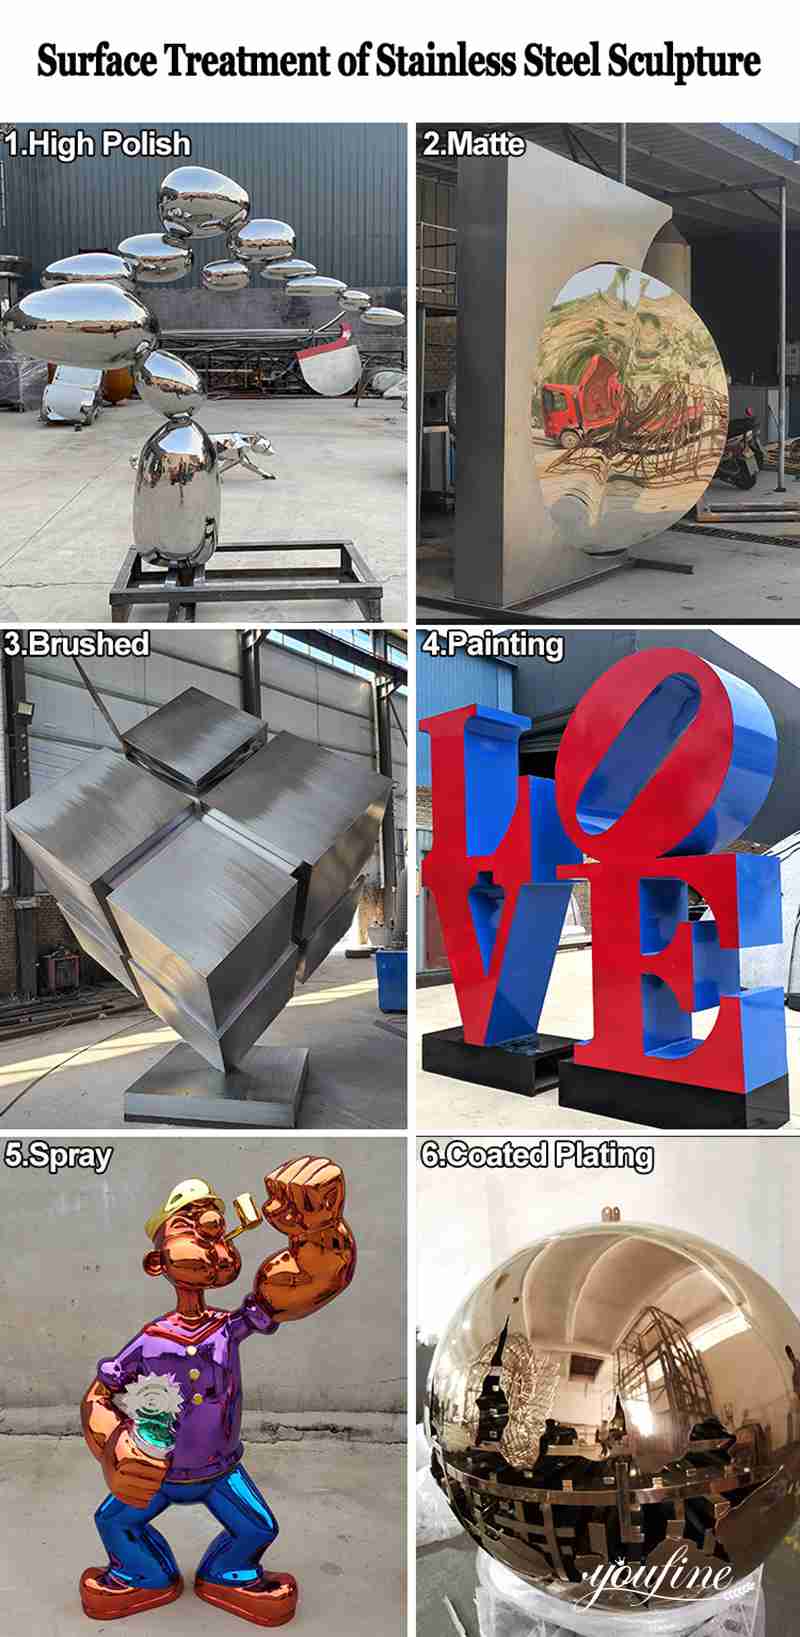 stainless steel sculpture - YouFine Sculpture (2)